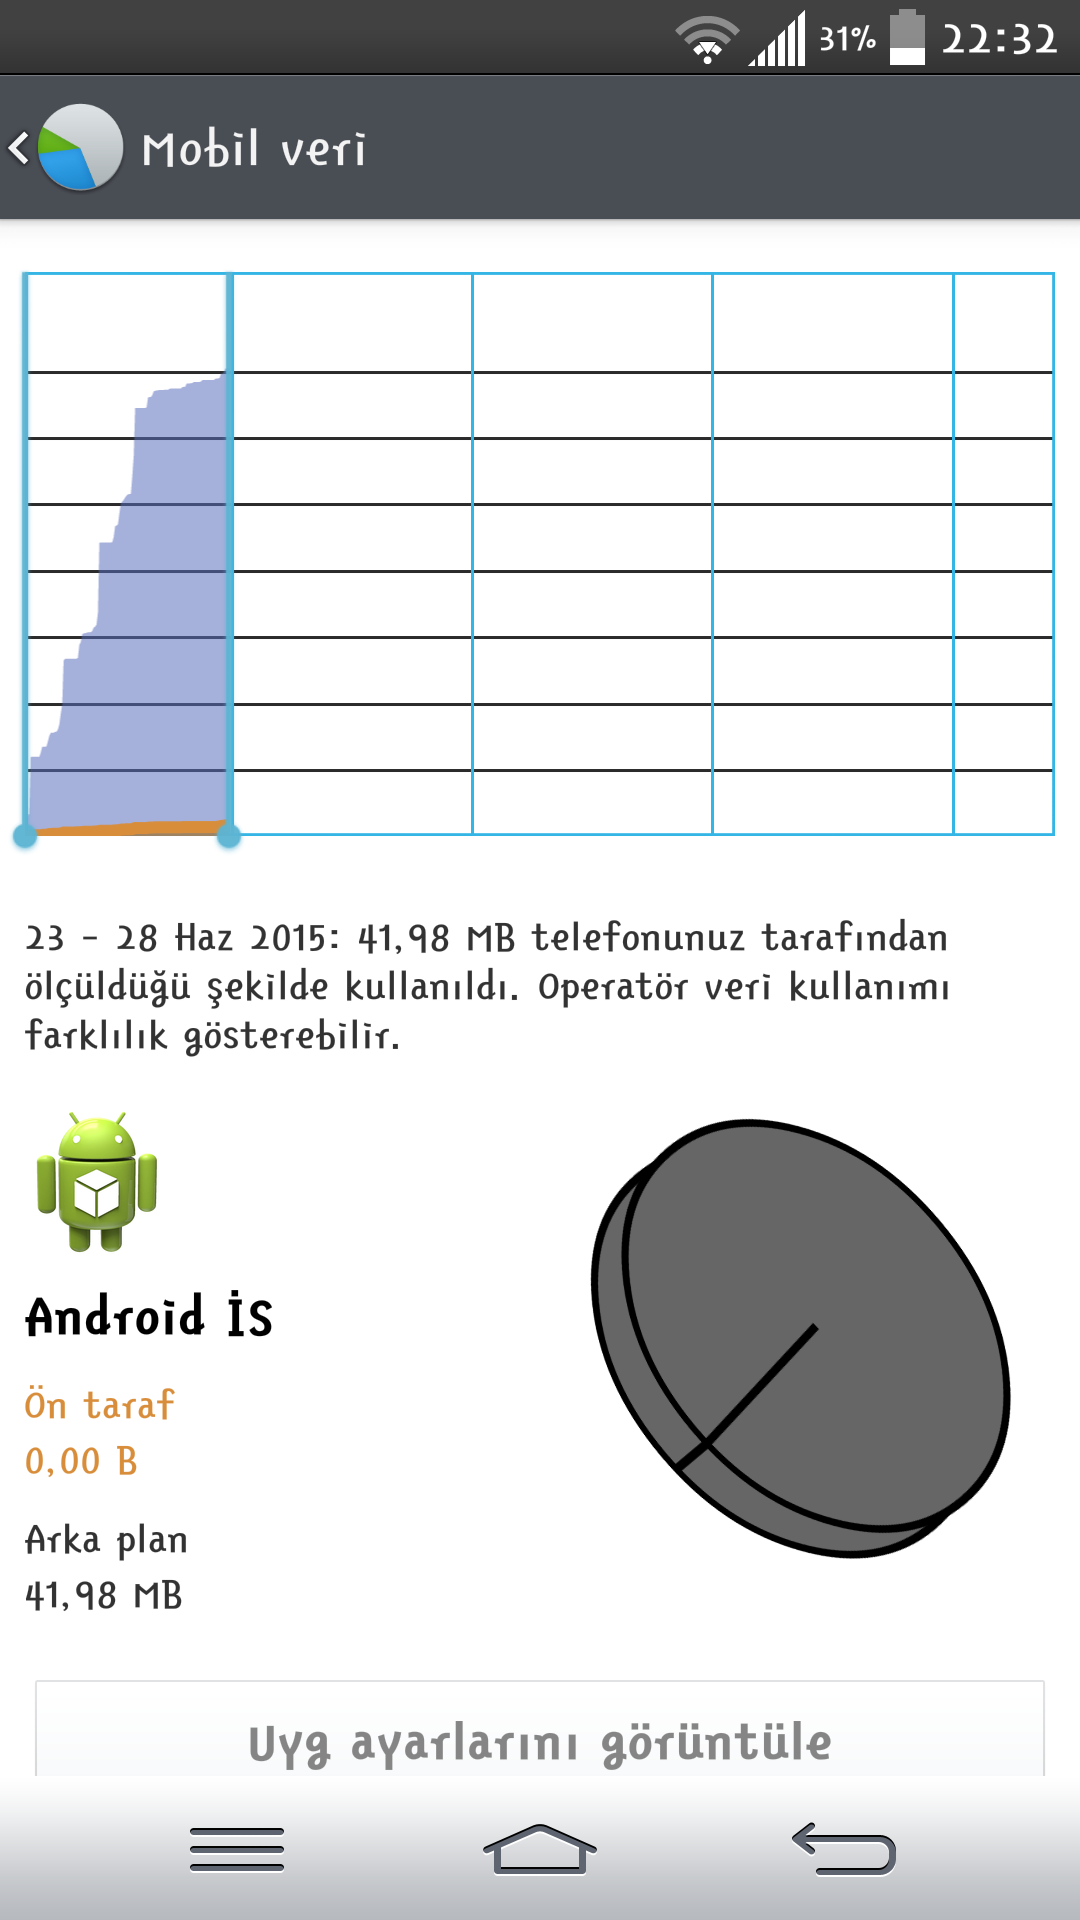  Lg G2 (Ls 980) Android IS sorunu